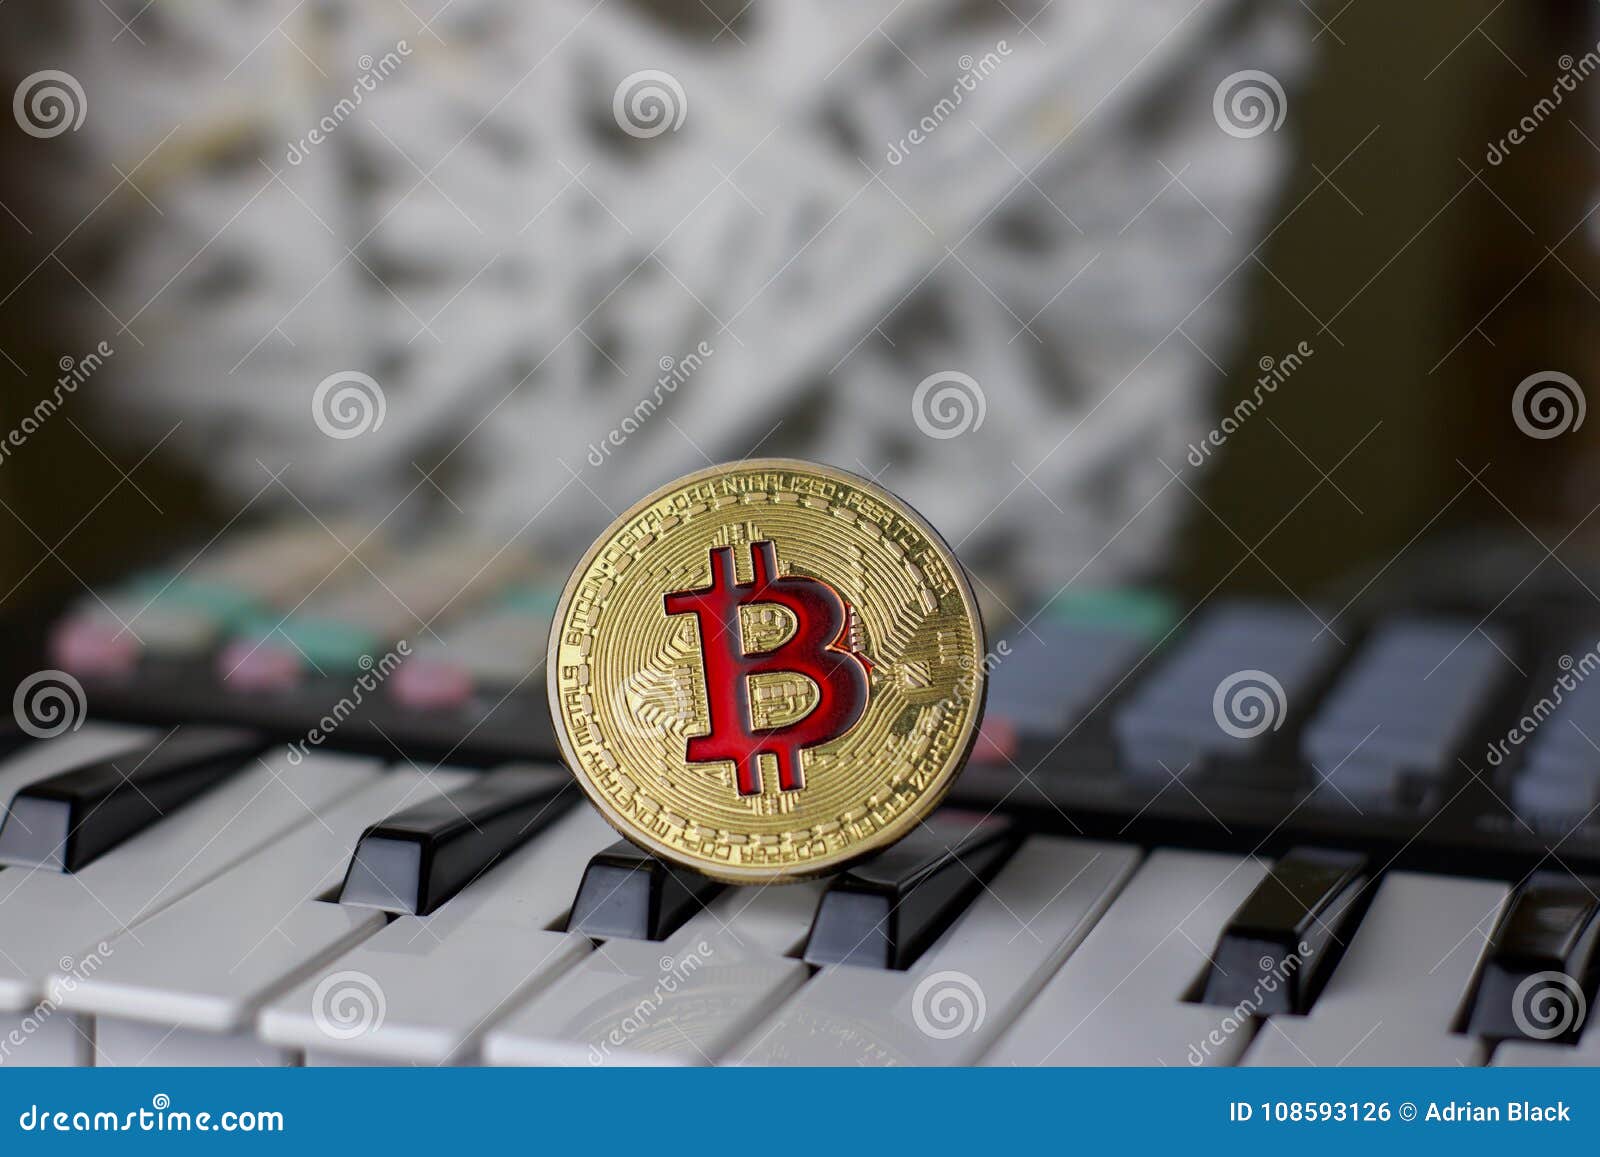 bitcoin music btc markets widget